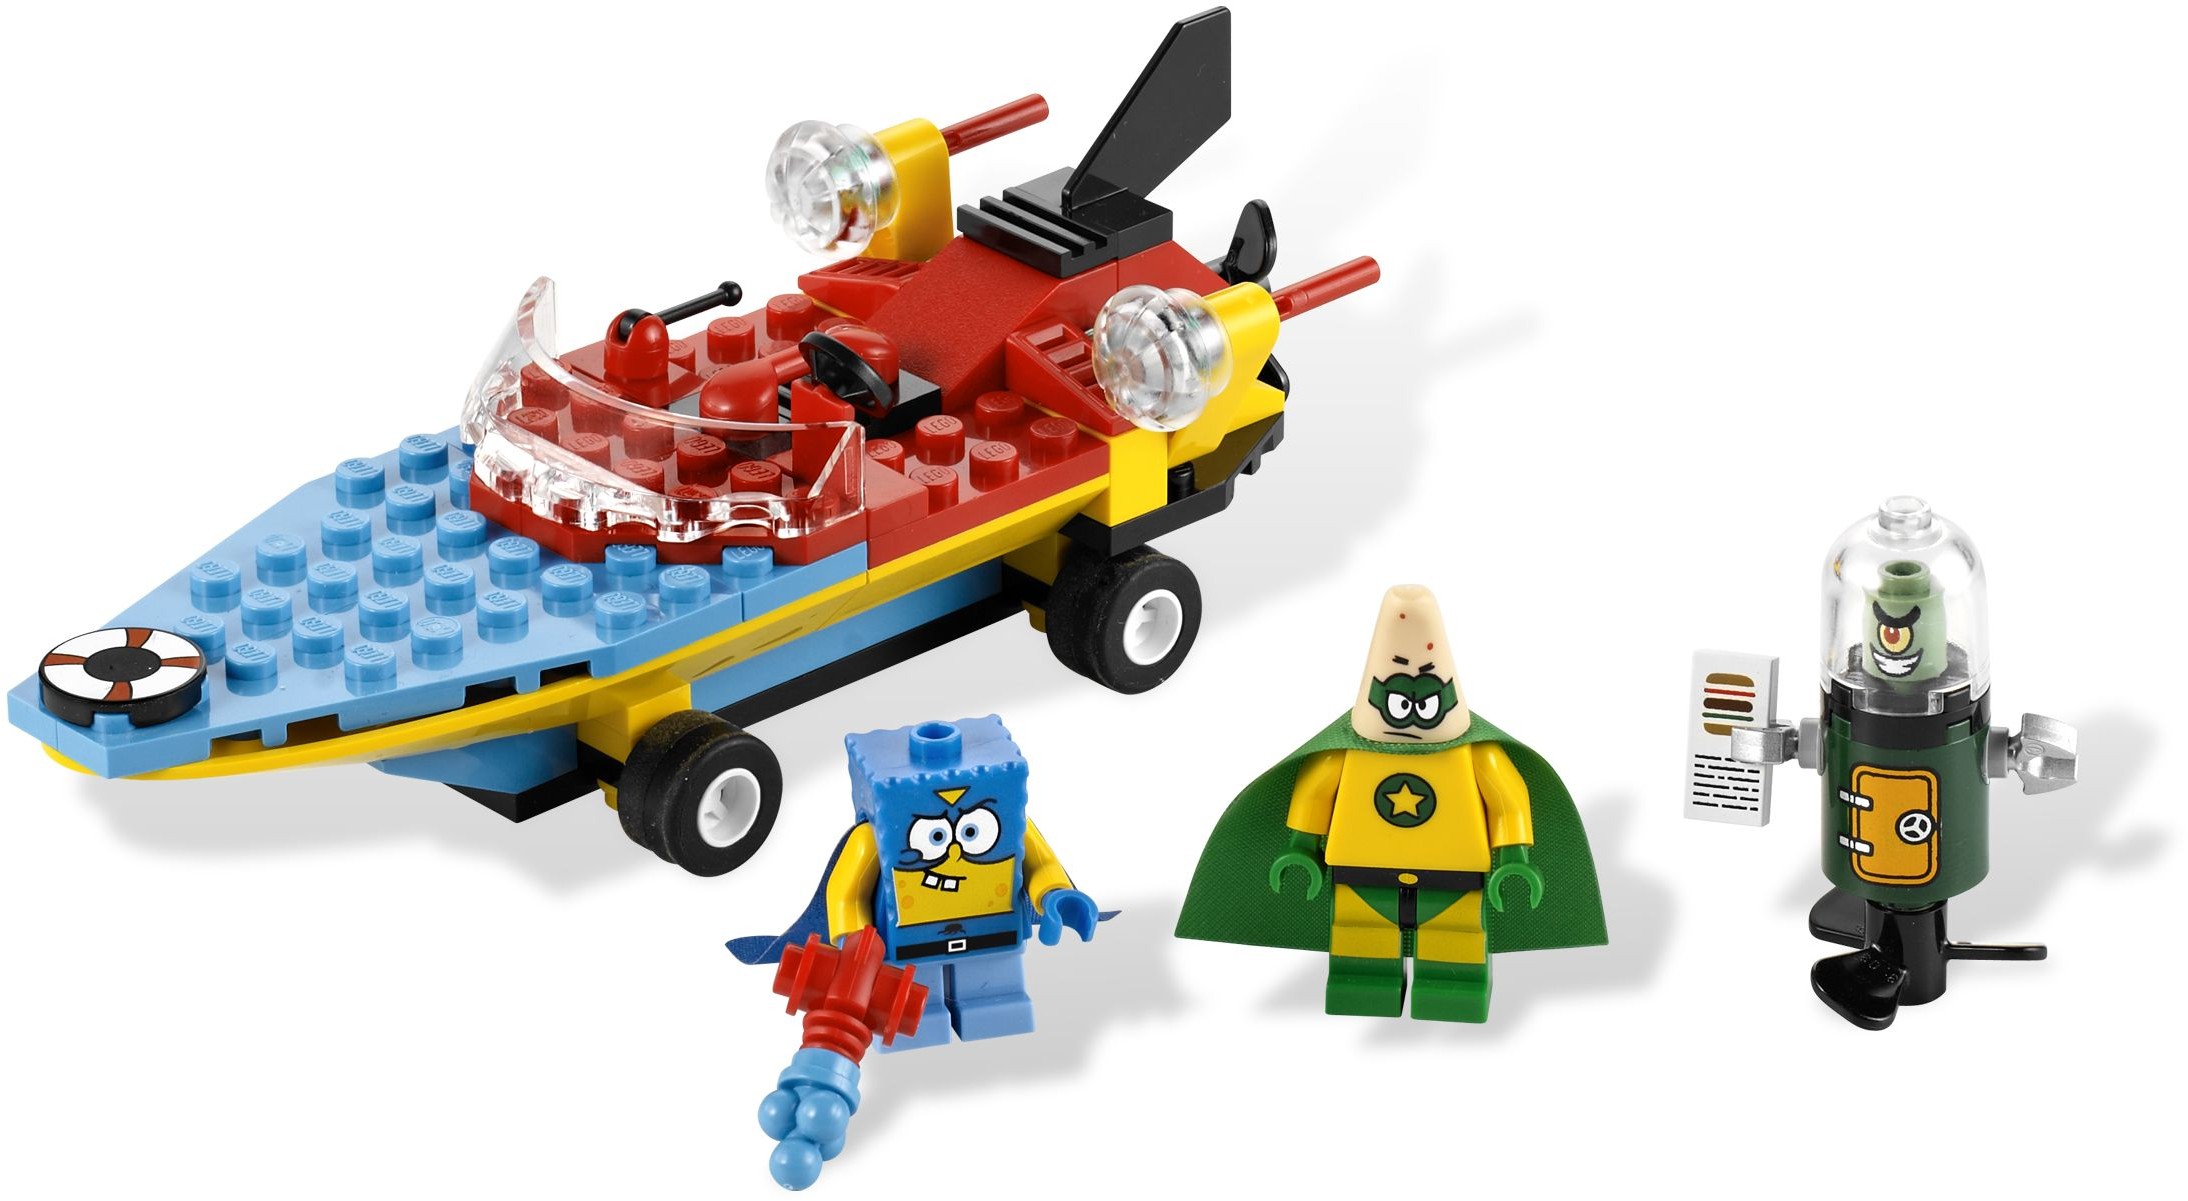 Super Hero FROM SET 3815 SPONGEBOB SQUAREPANTS NEW LEGO SpongeBob bob025 